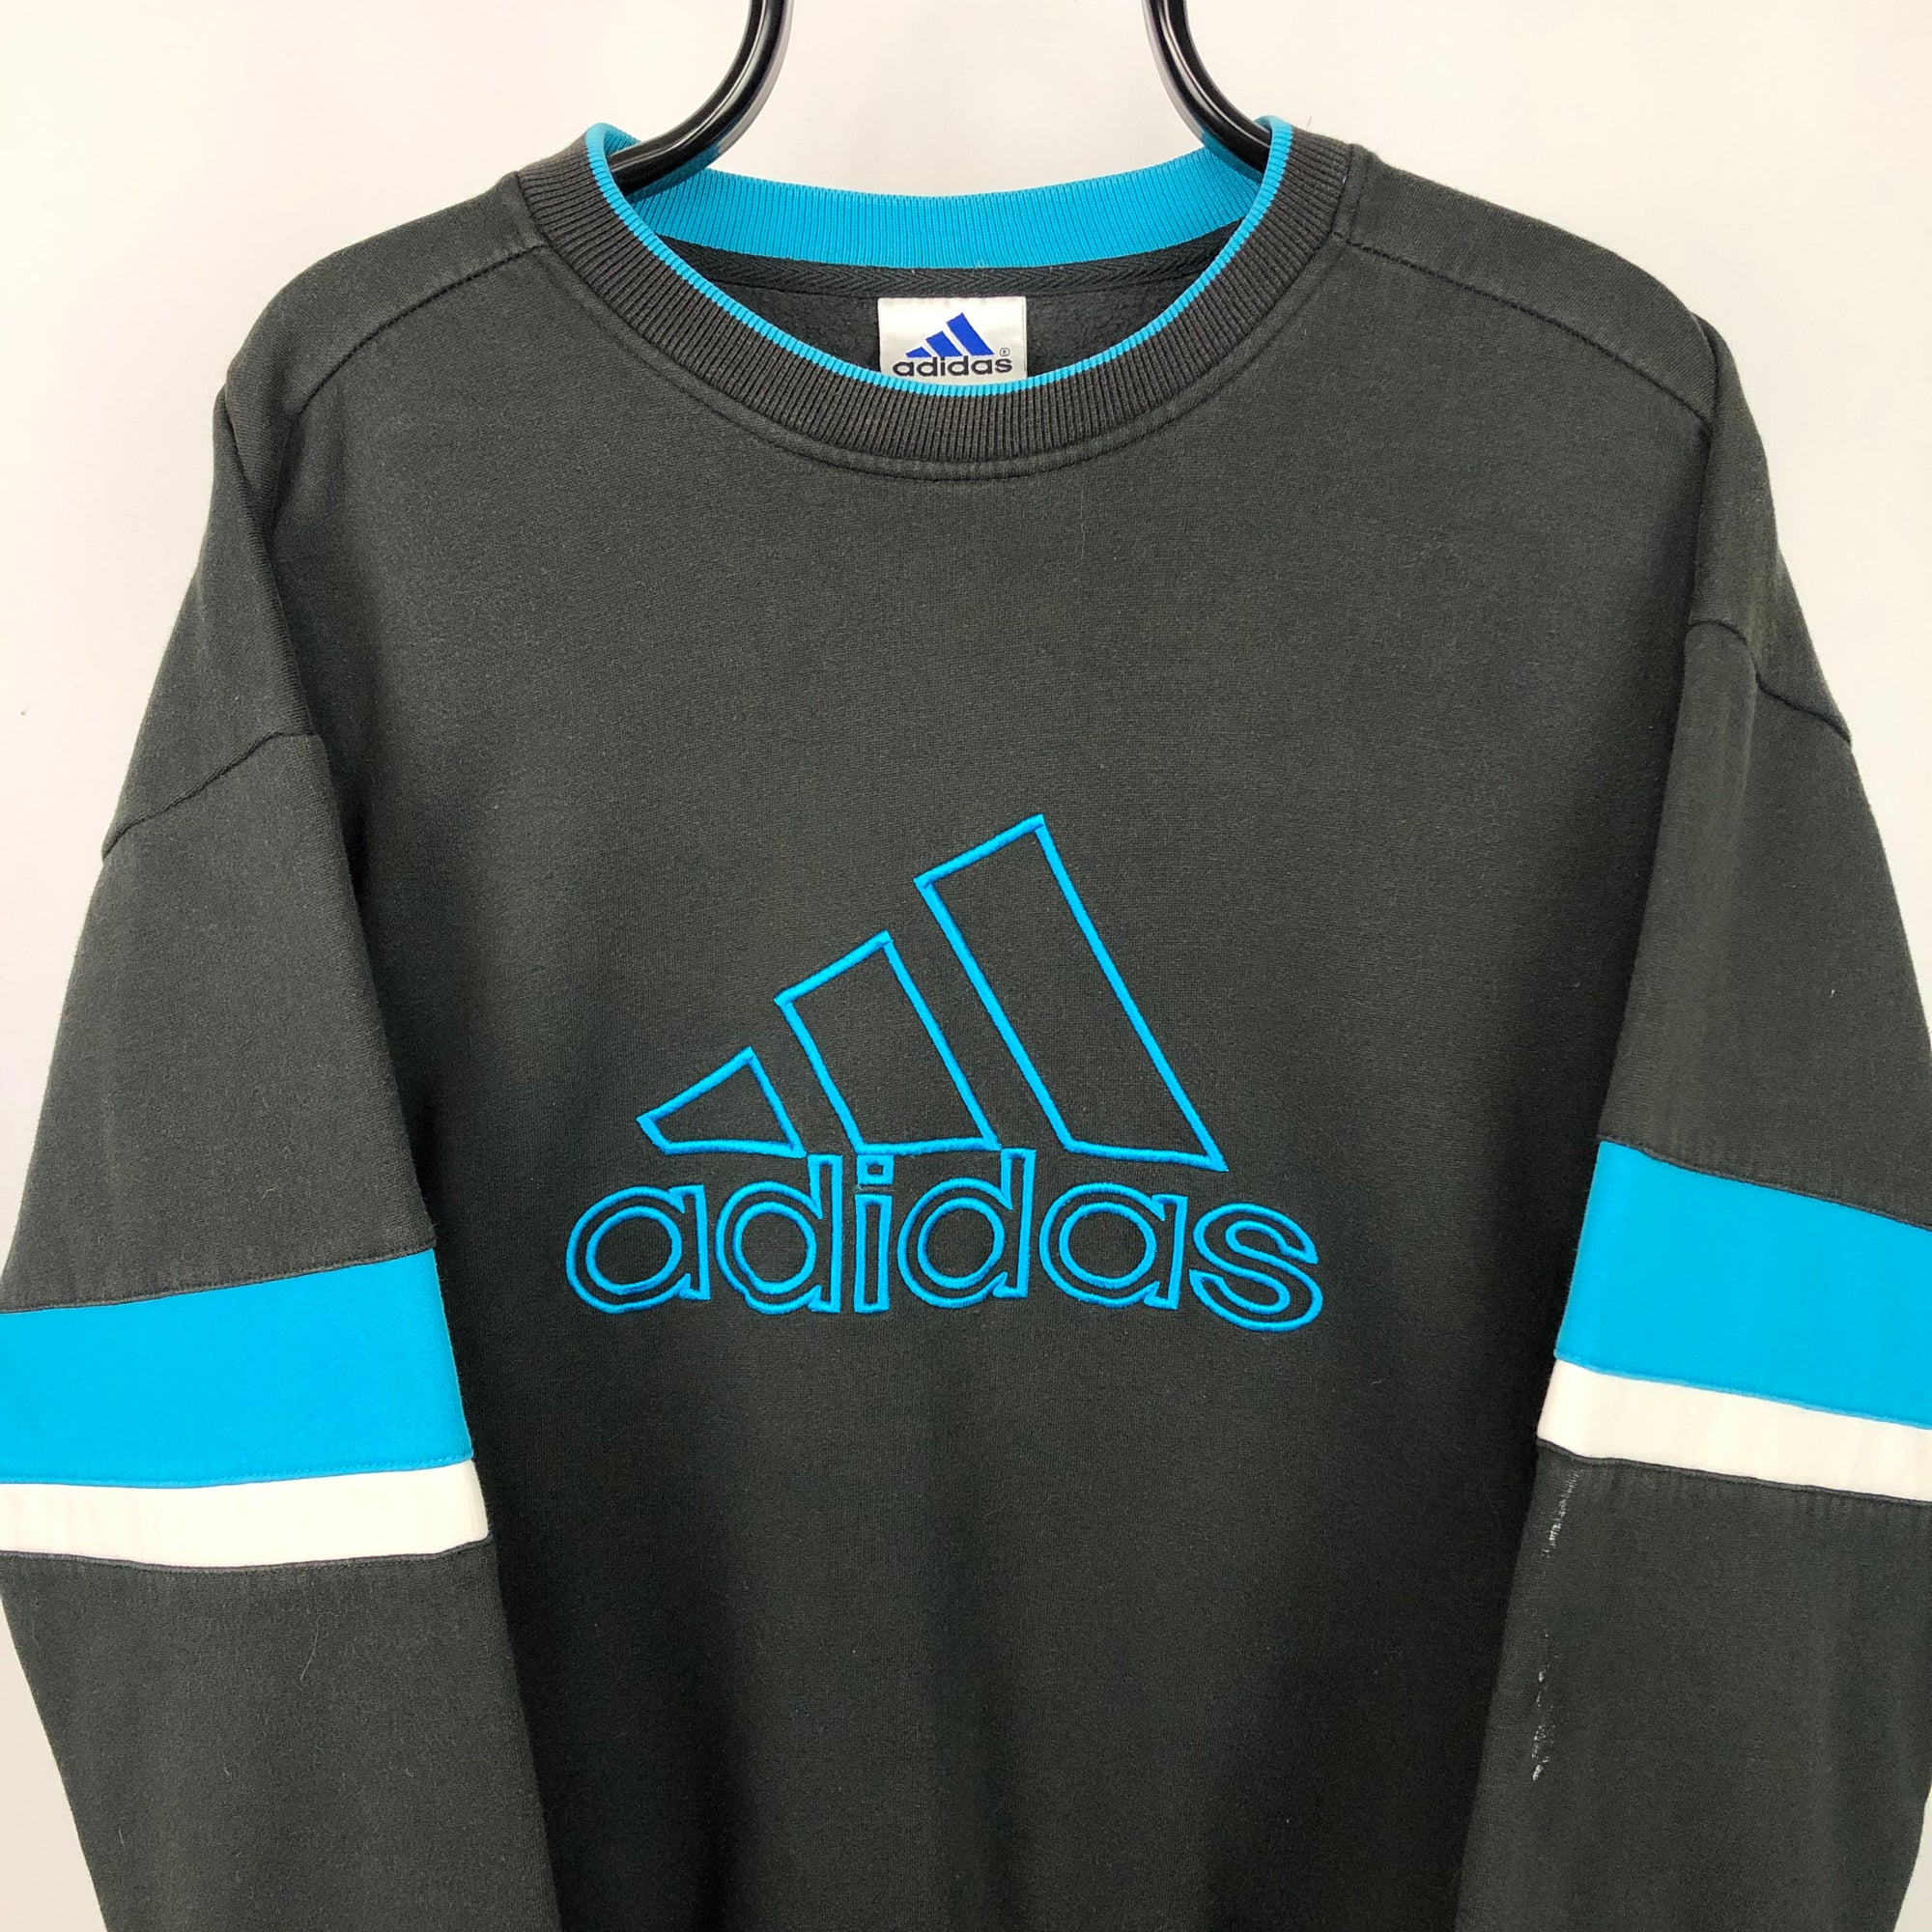 Vintage 90s Adidas Spellout Sweatshirt in Black/Blue/White - Men's Large/Women's XL